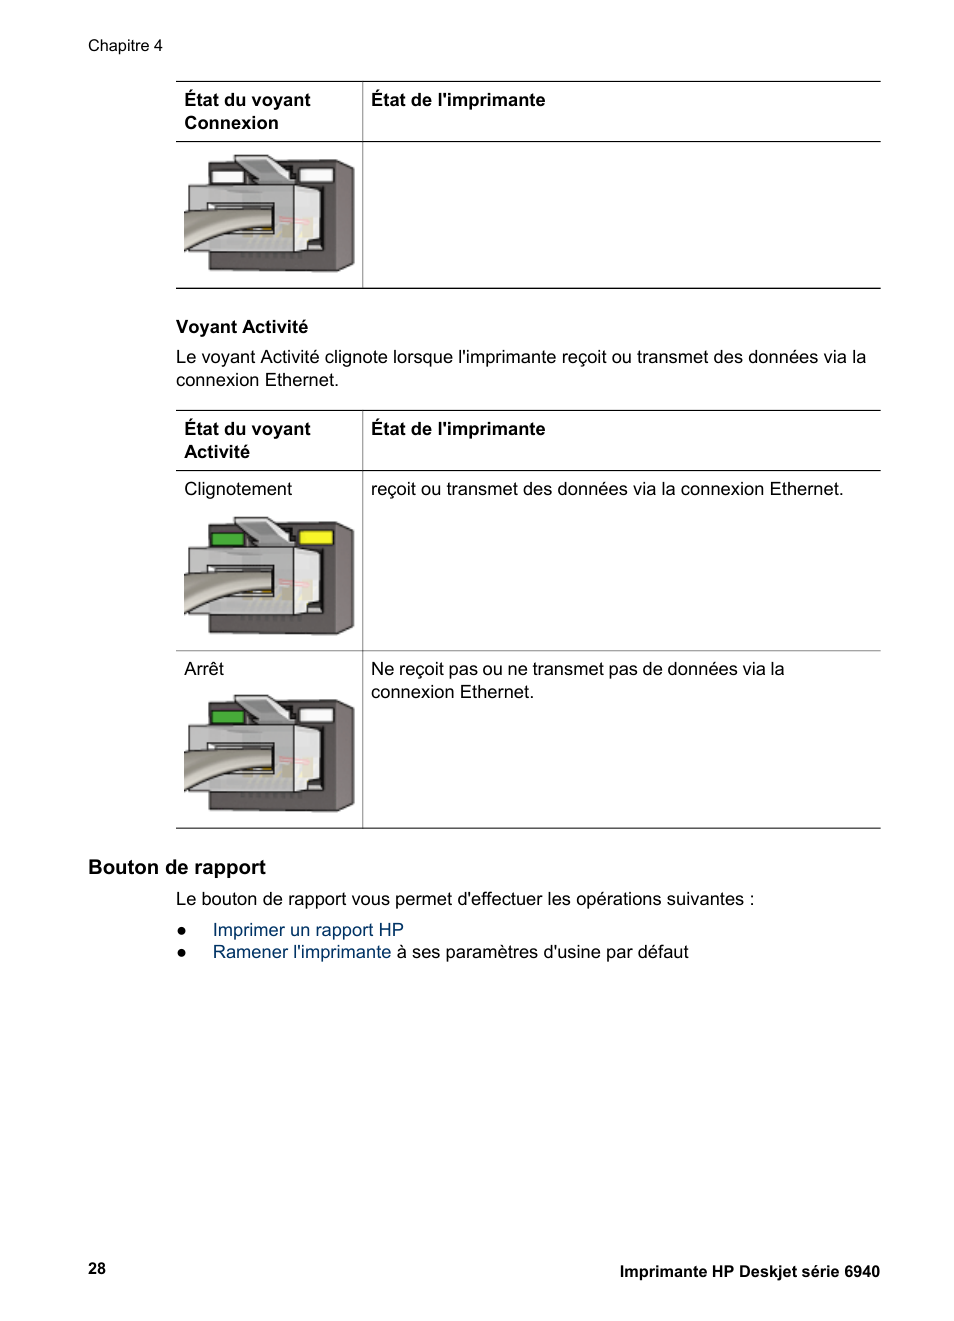 Bouton de rapport | HP Deskjet 6940 Manuel d'utilisation | Page 30 / 164